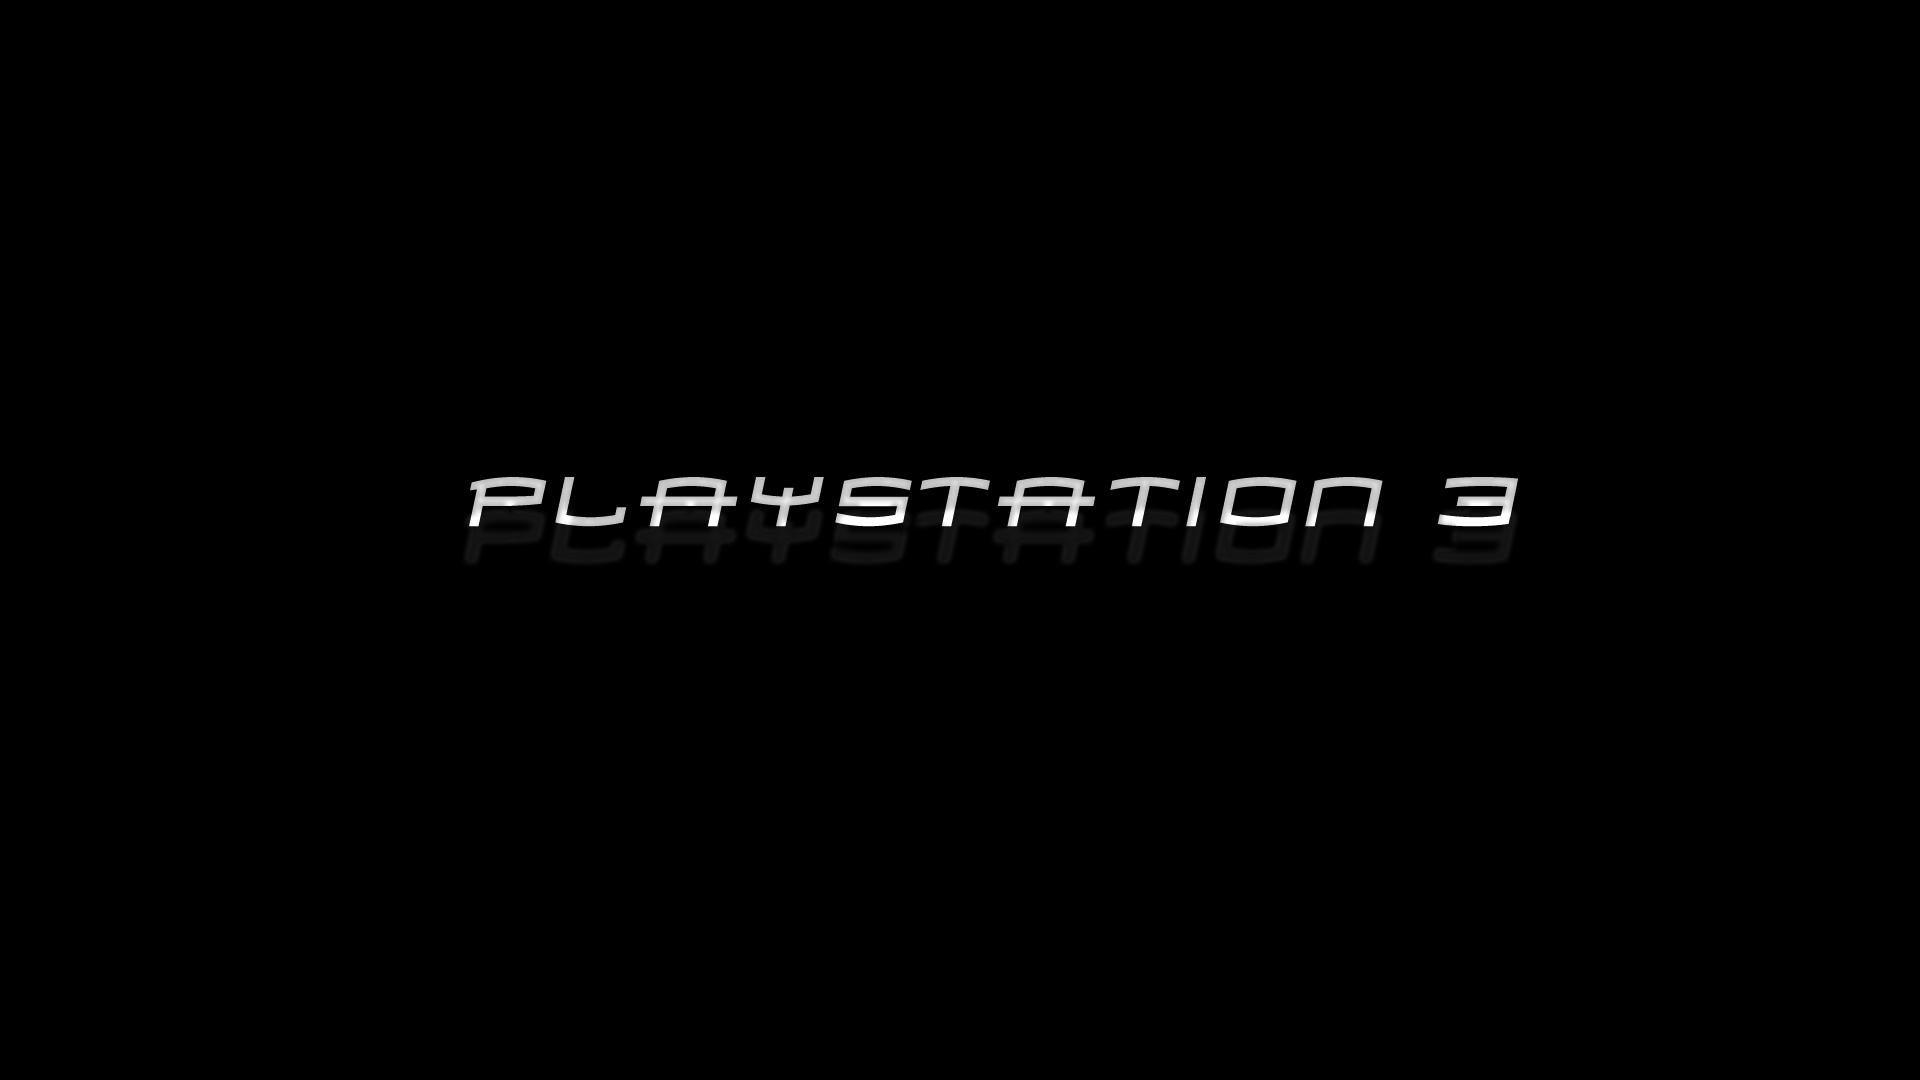 PS3 Logo Wallpaper Free PS3 Logo Background